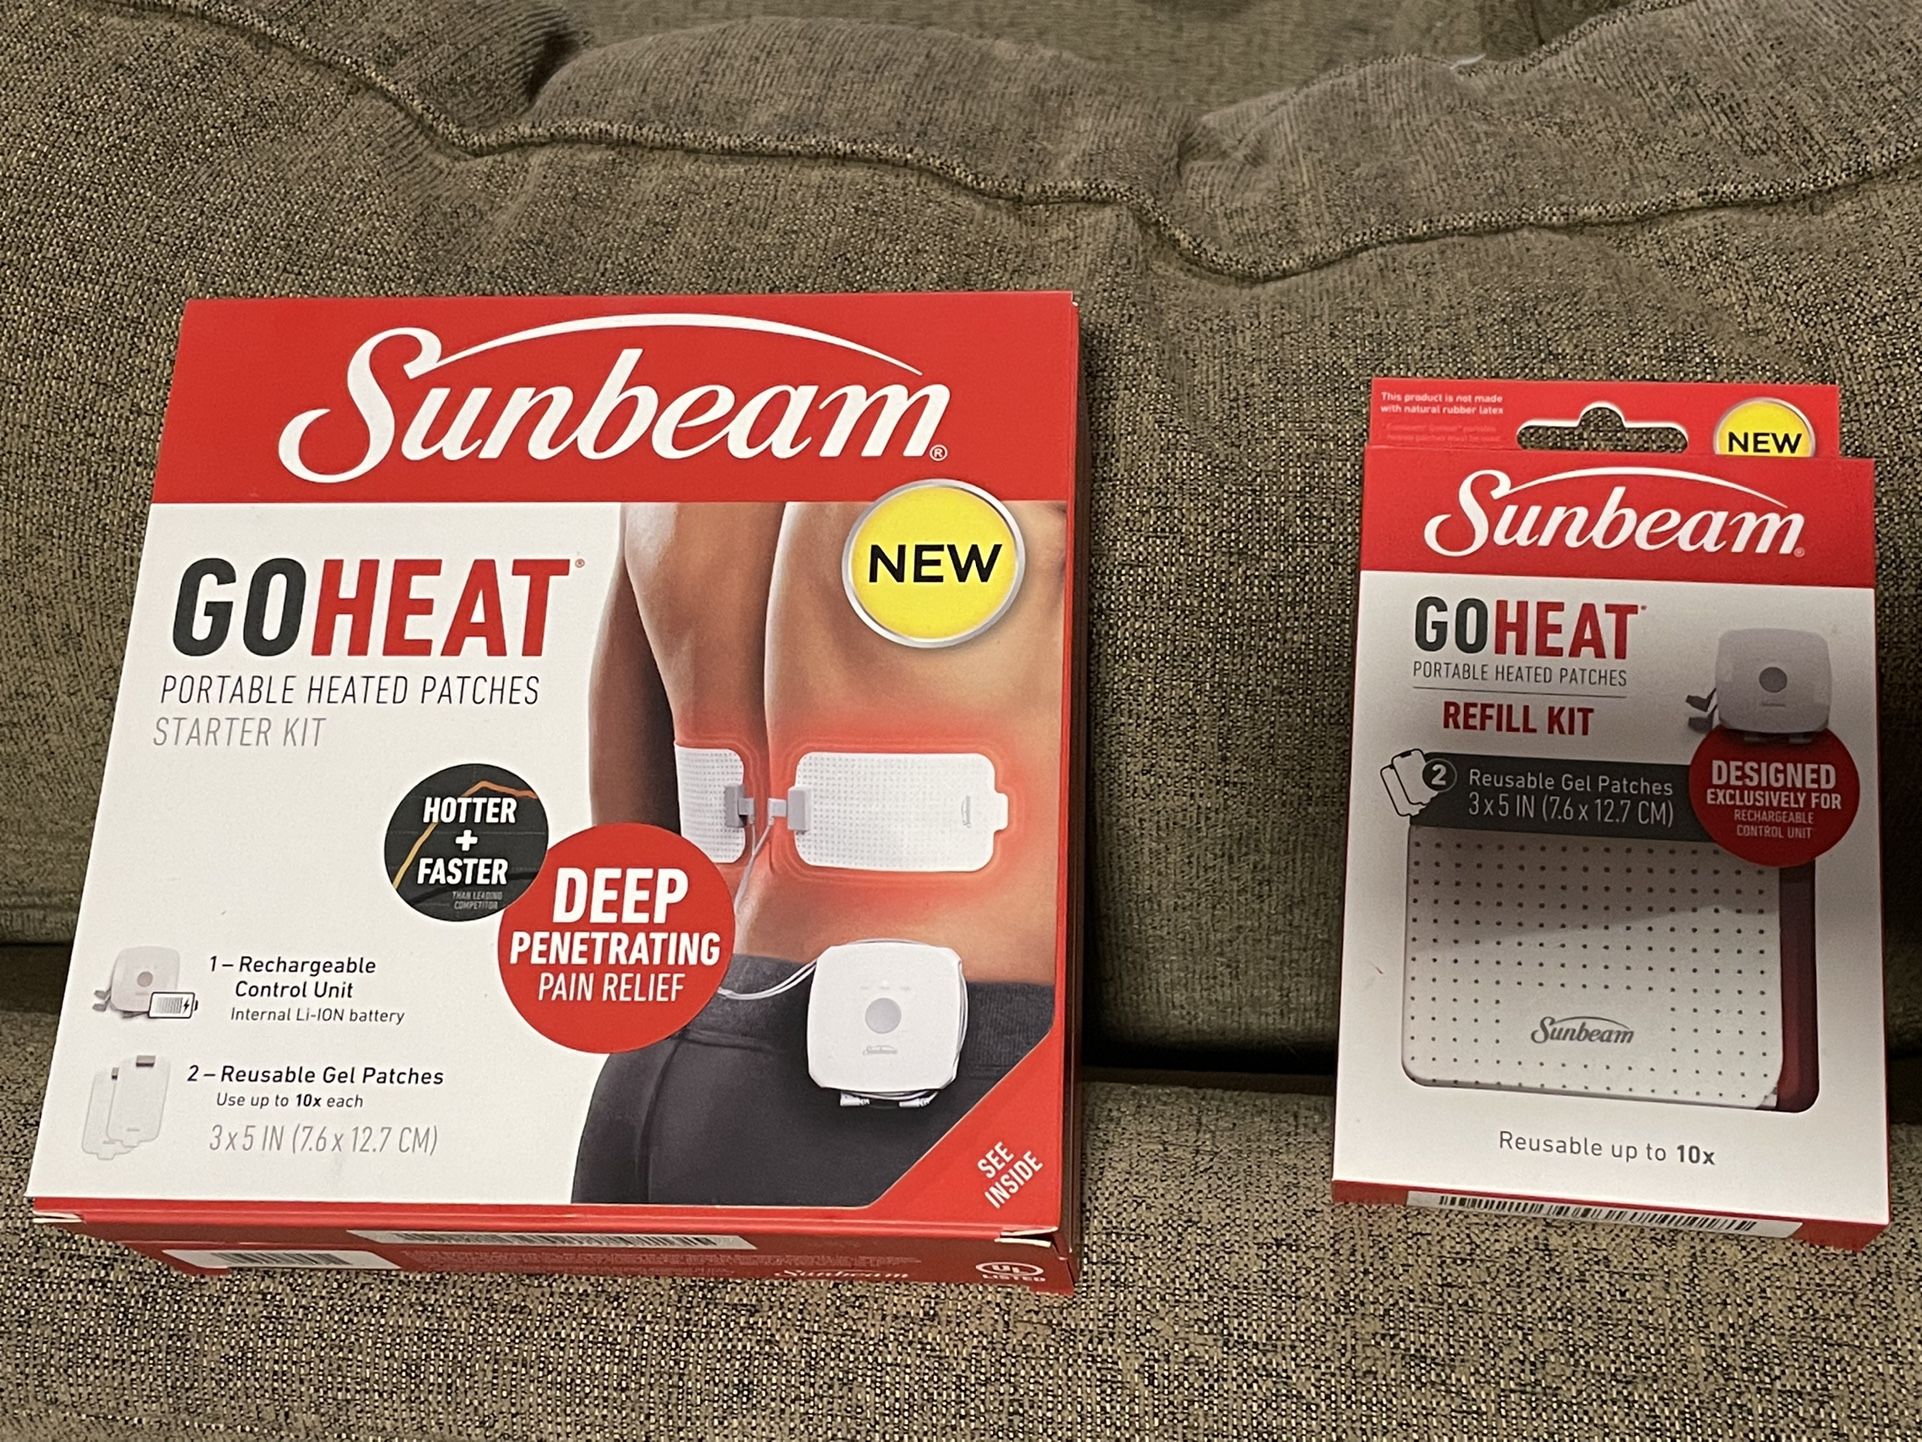 Sunbeam Go Heat Portable Heated Patches Starter Kit